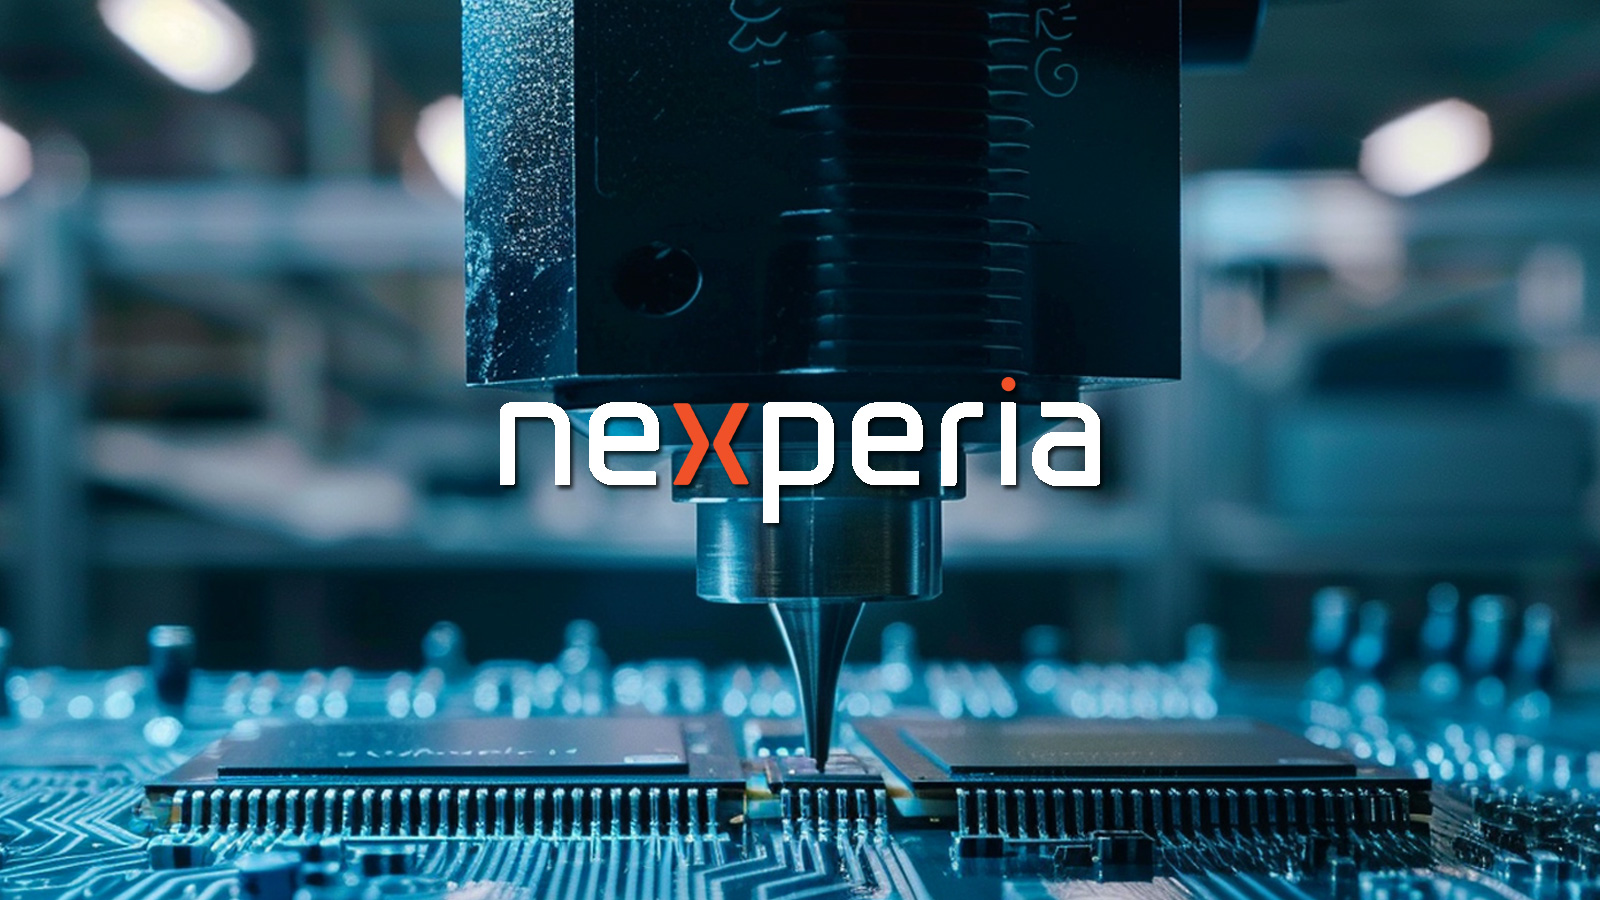 Nexperia logo of image of chip fabrication